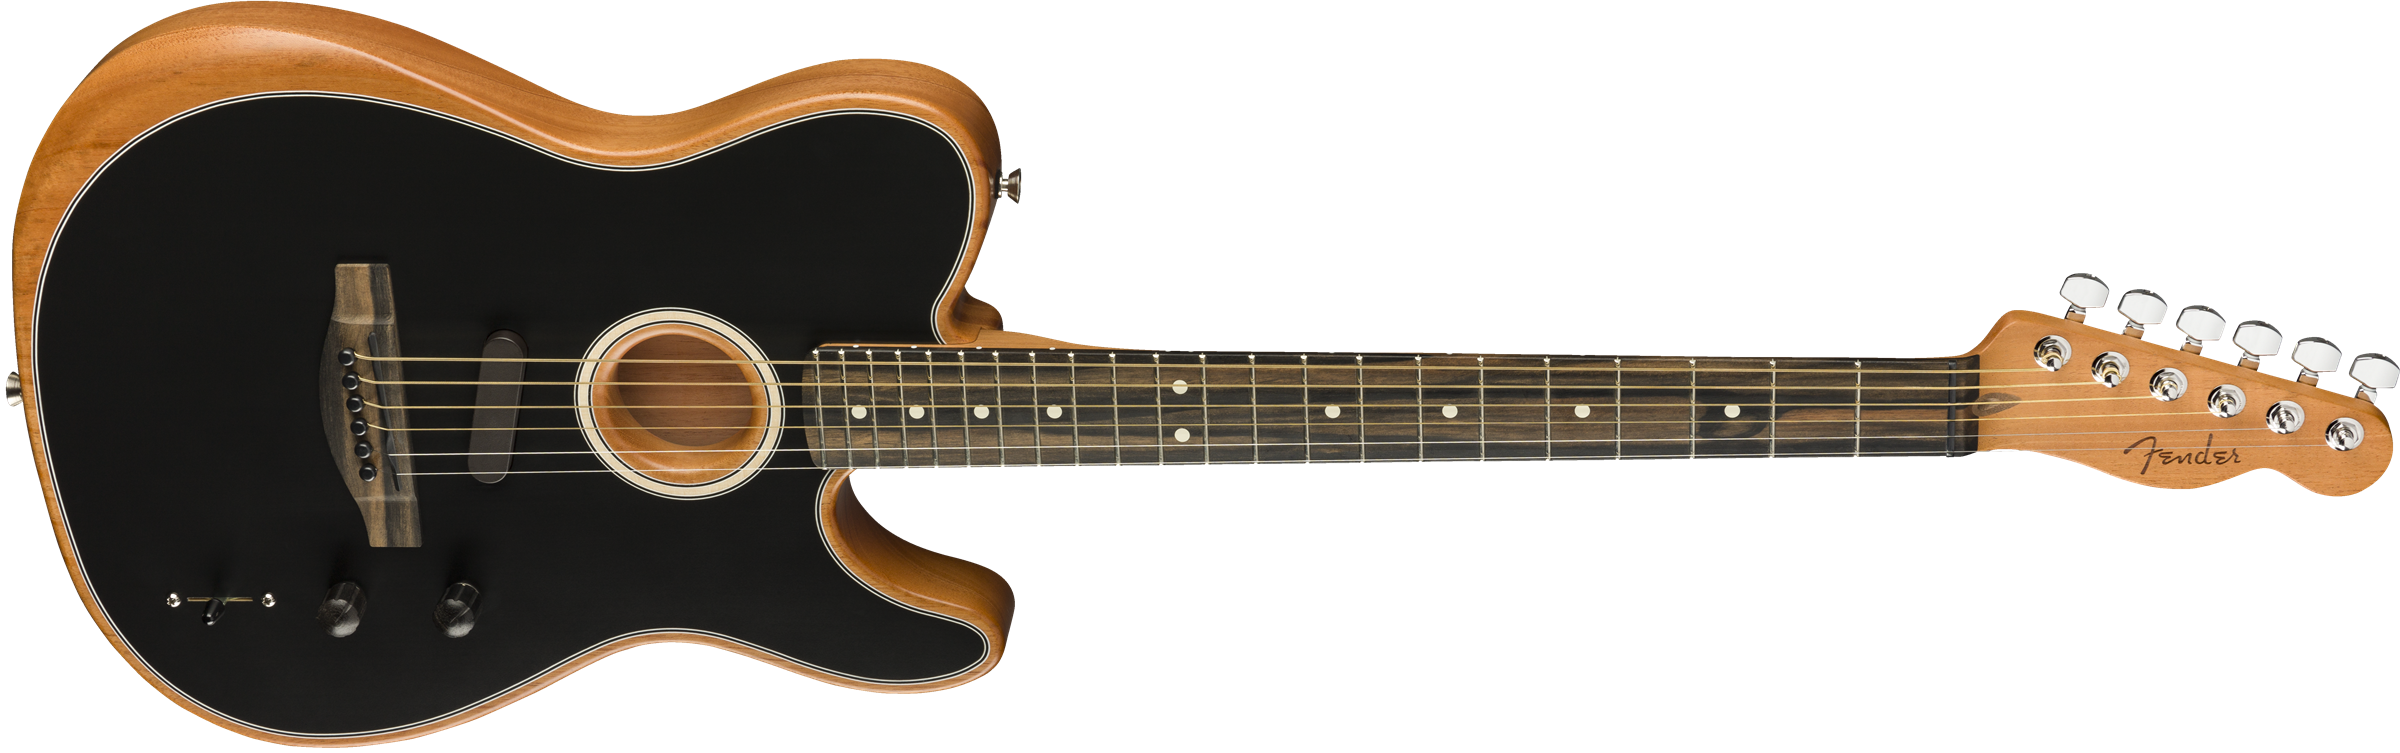 Fender Tele American Acoustasonic Usa Eb - Black - Elektroakustische Gitarre - Variation 2